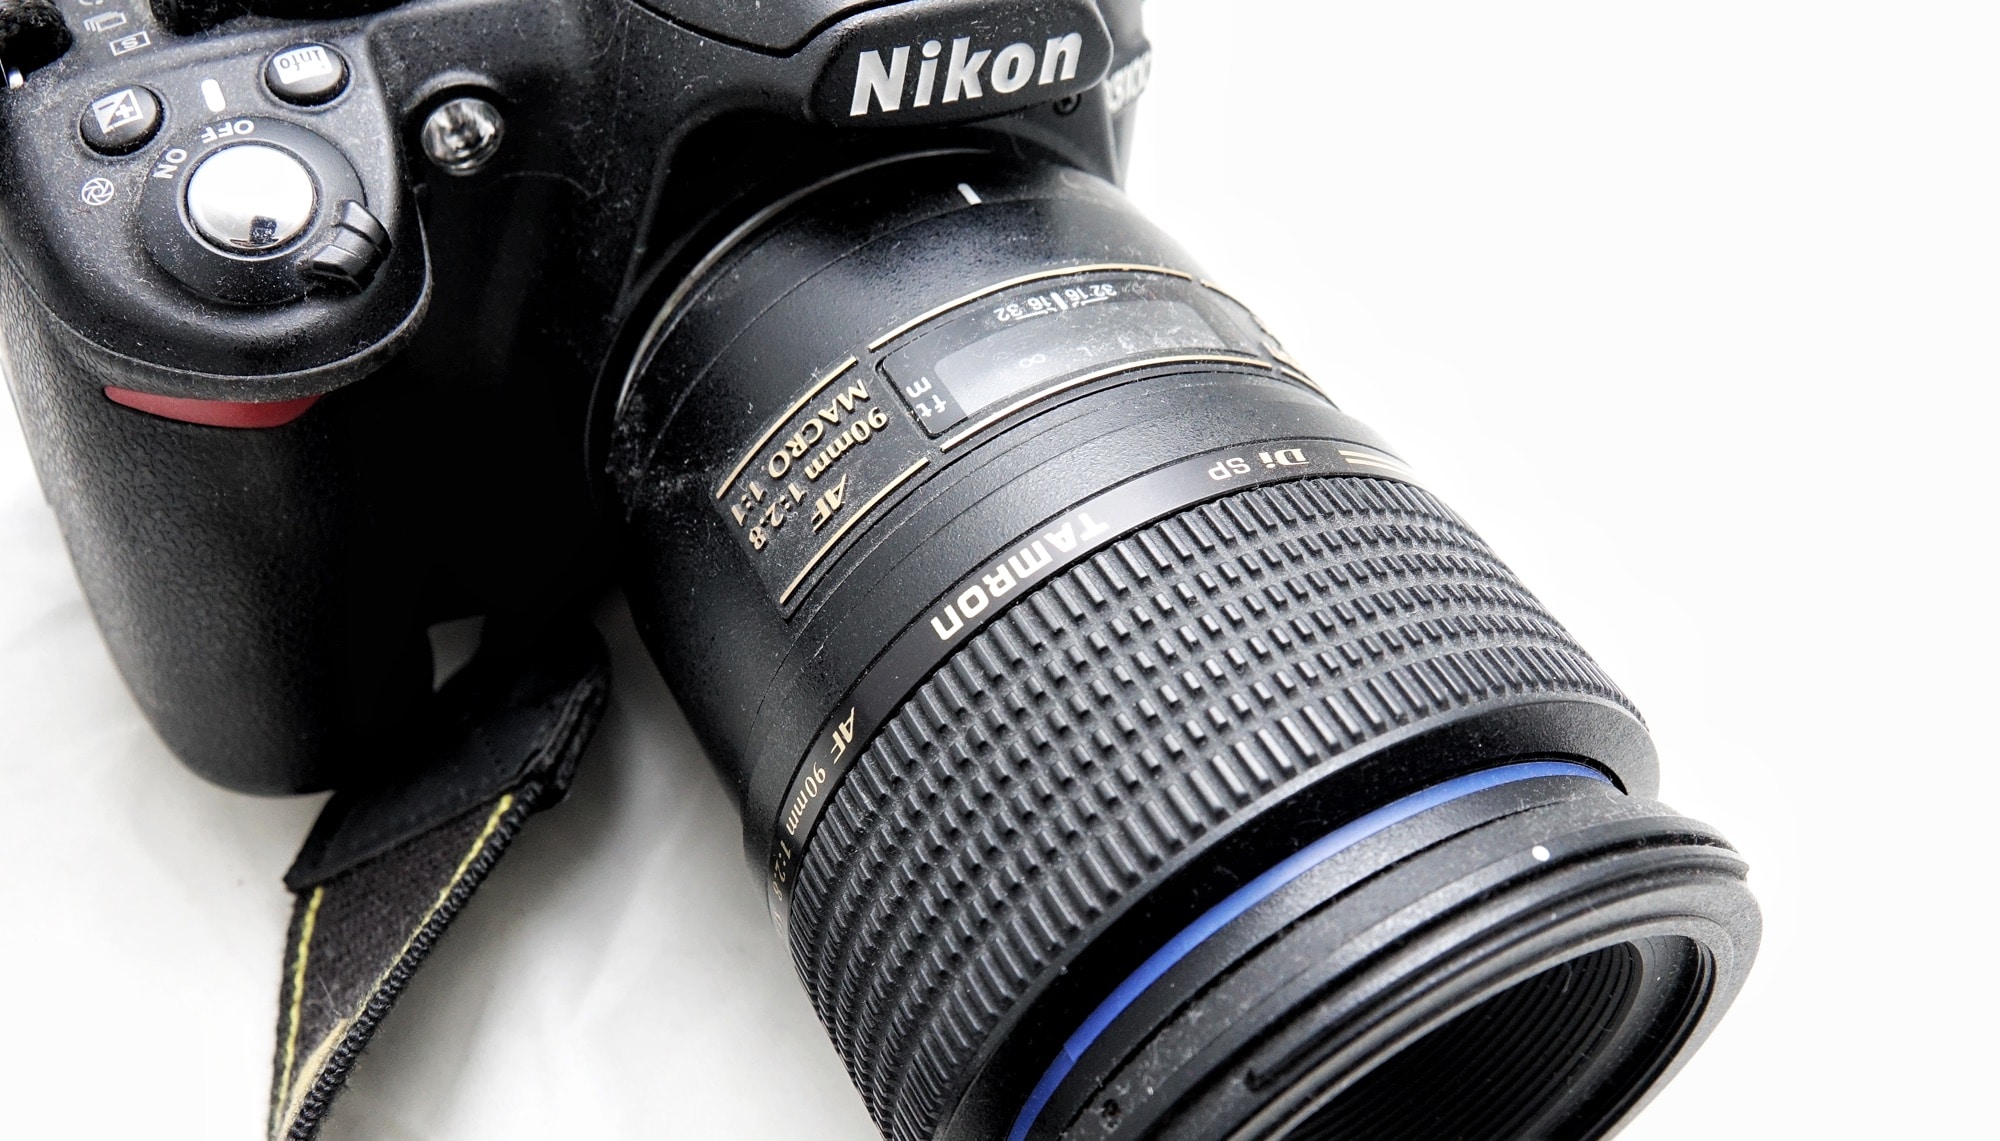 Tamron's 90mm macro mounted to a Nikon digital camera